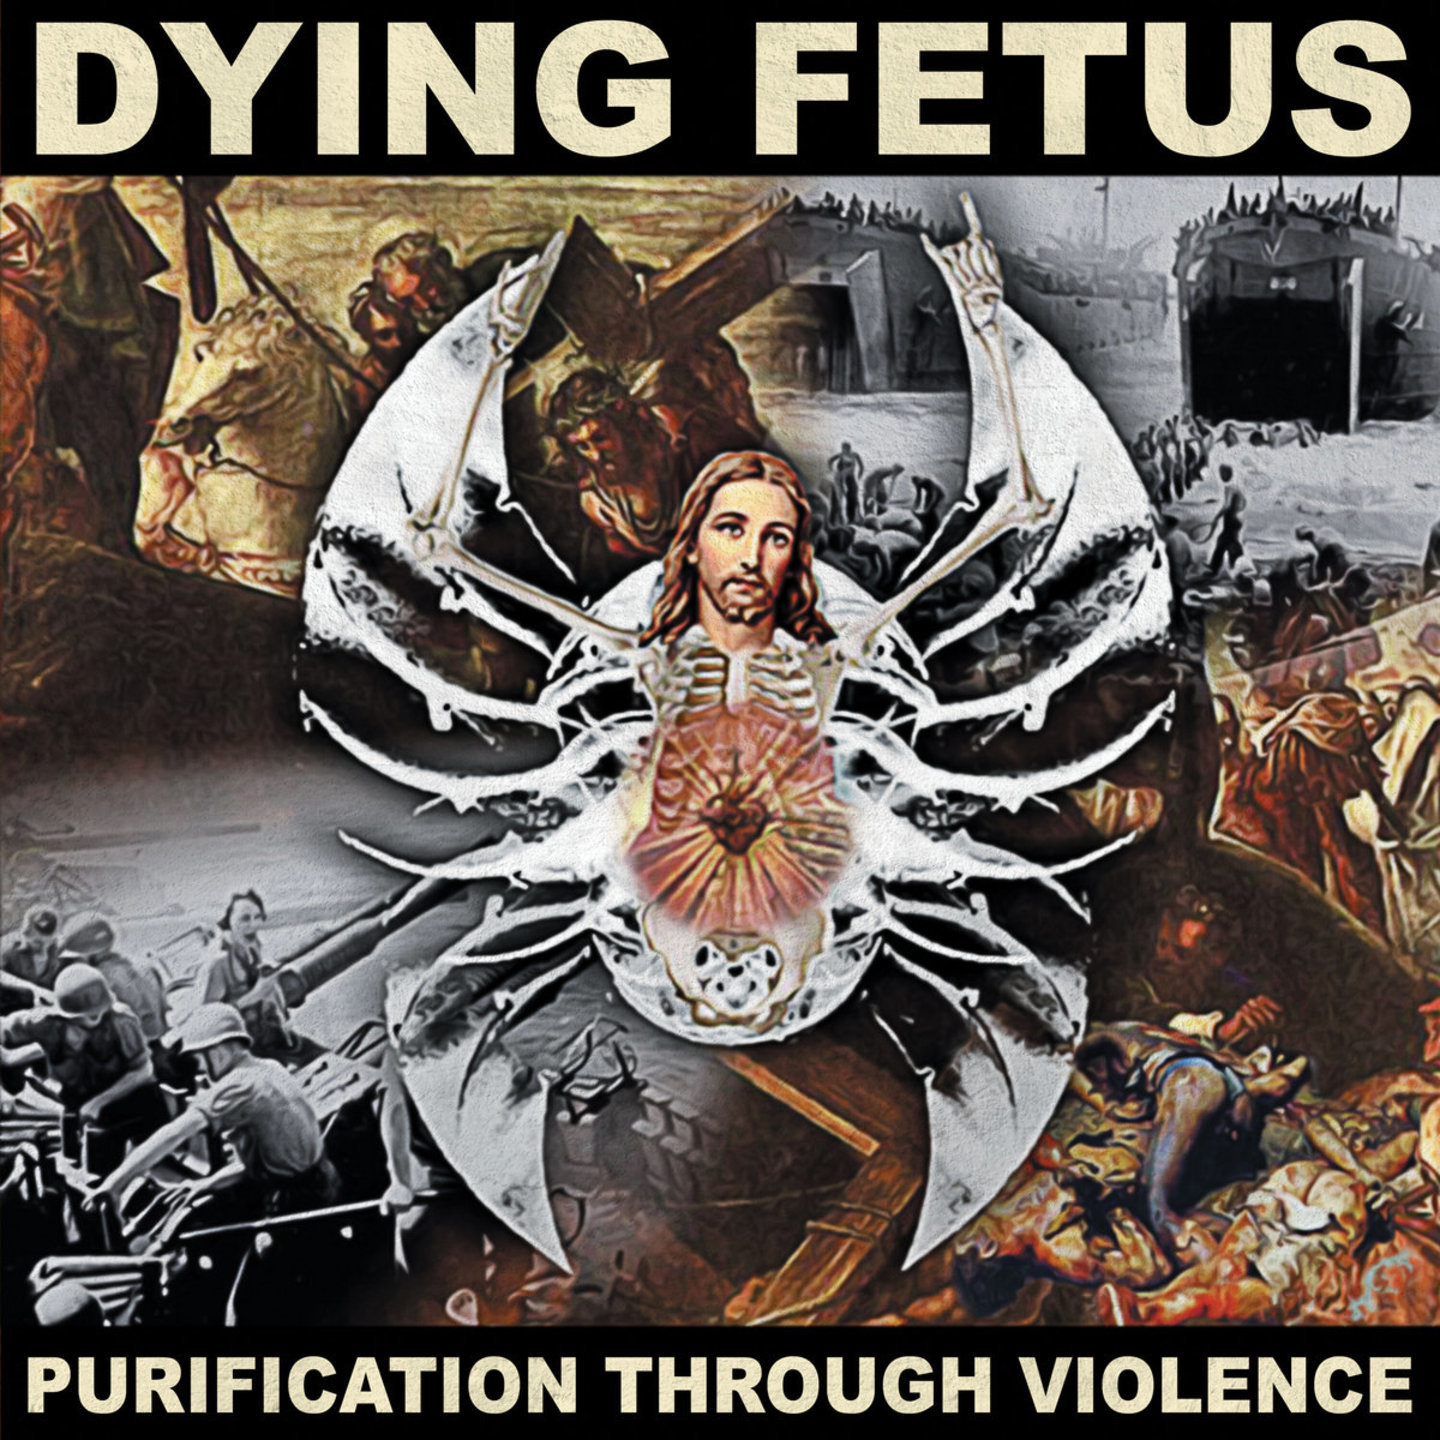 DYING FETUS - Purification Through Violence LP (White vinyl)